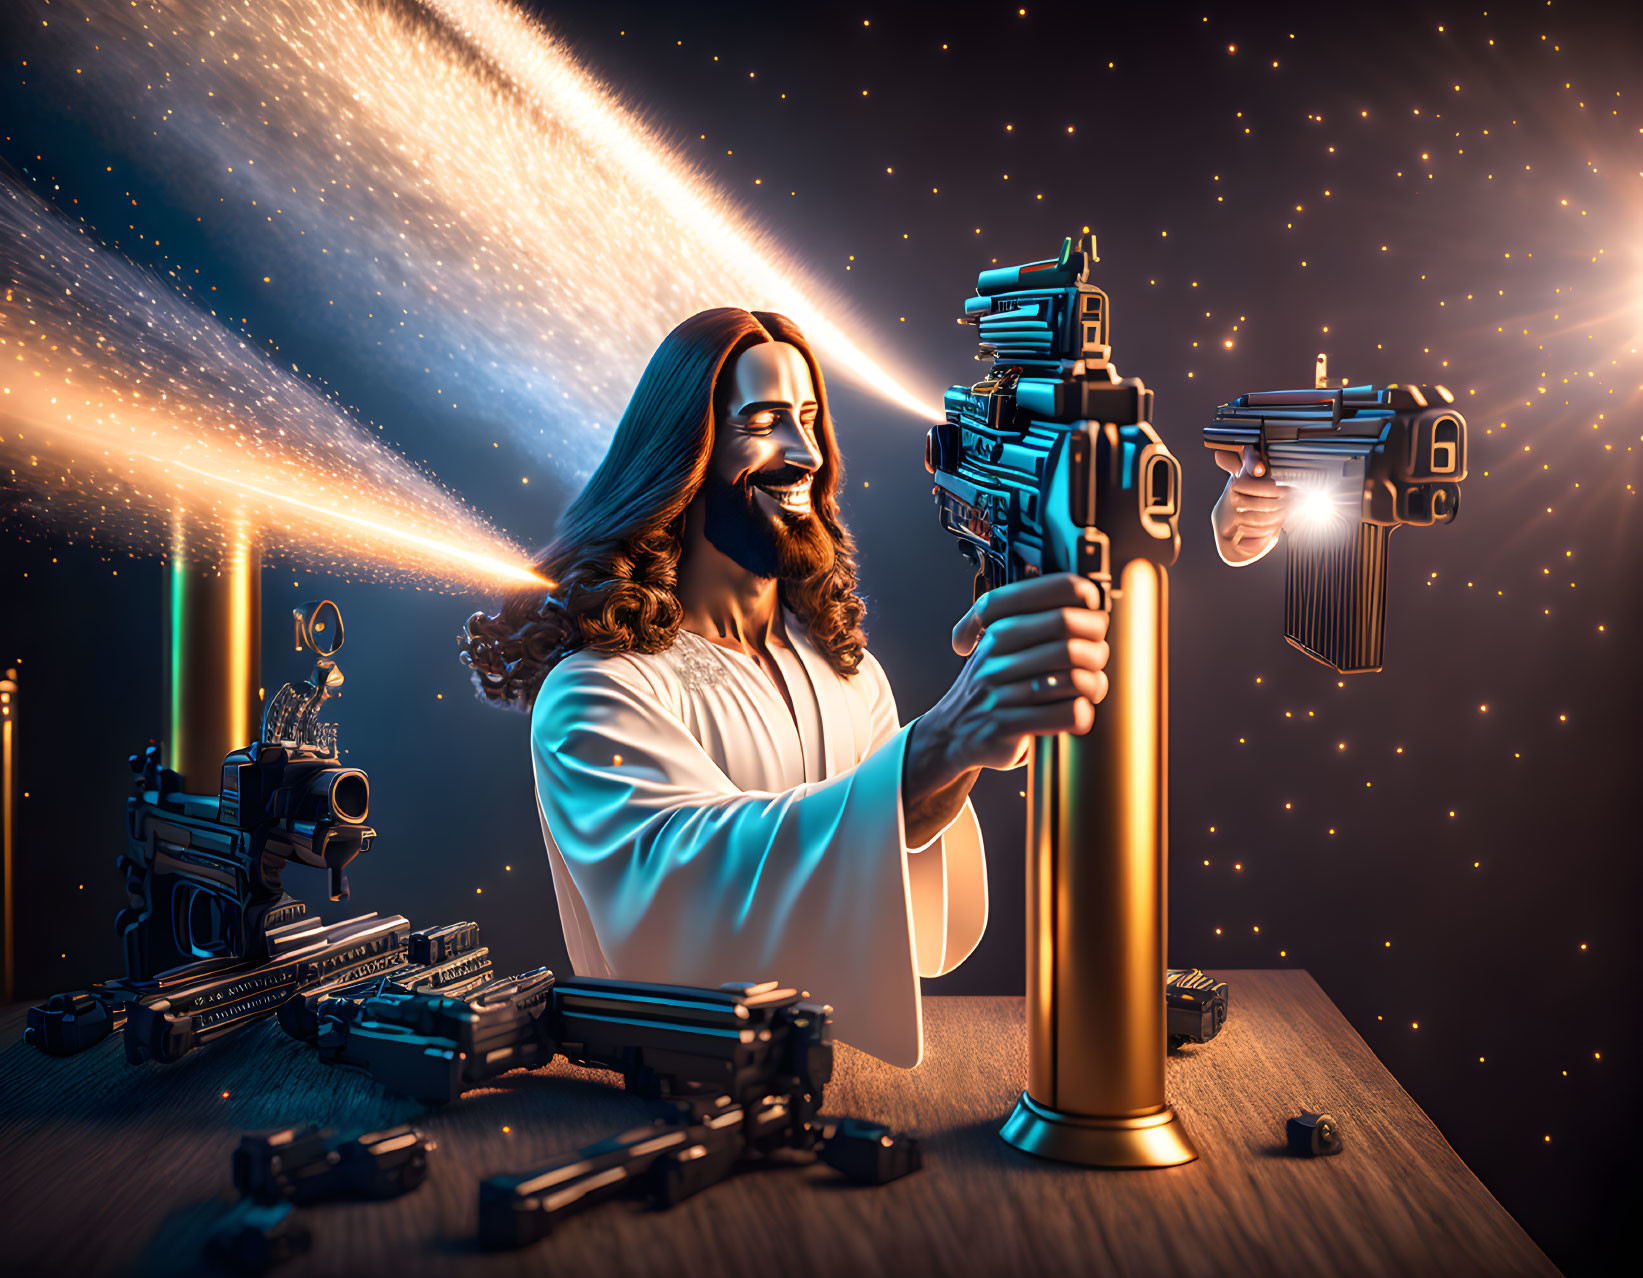 Religious figure with modern firearm in cosmic setting